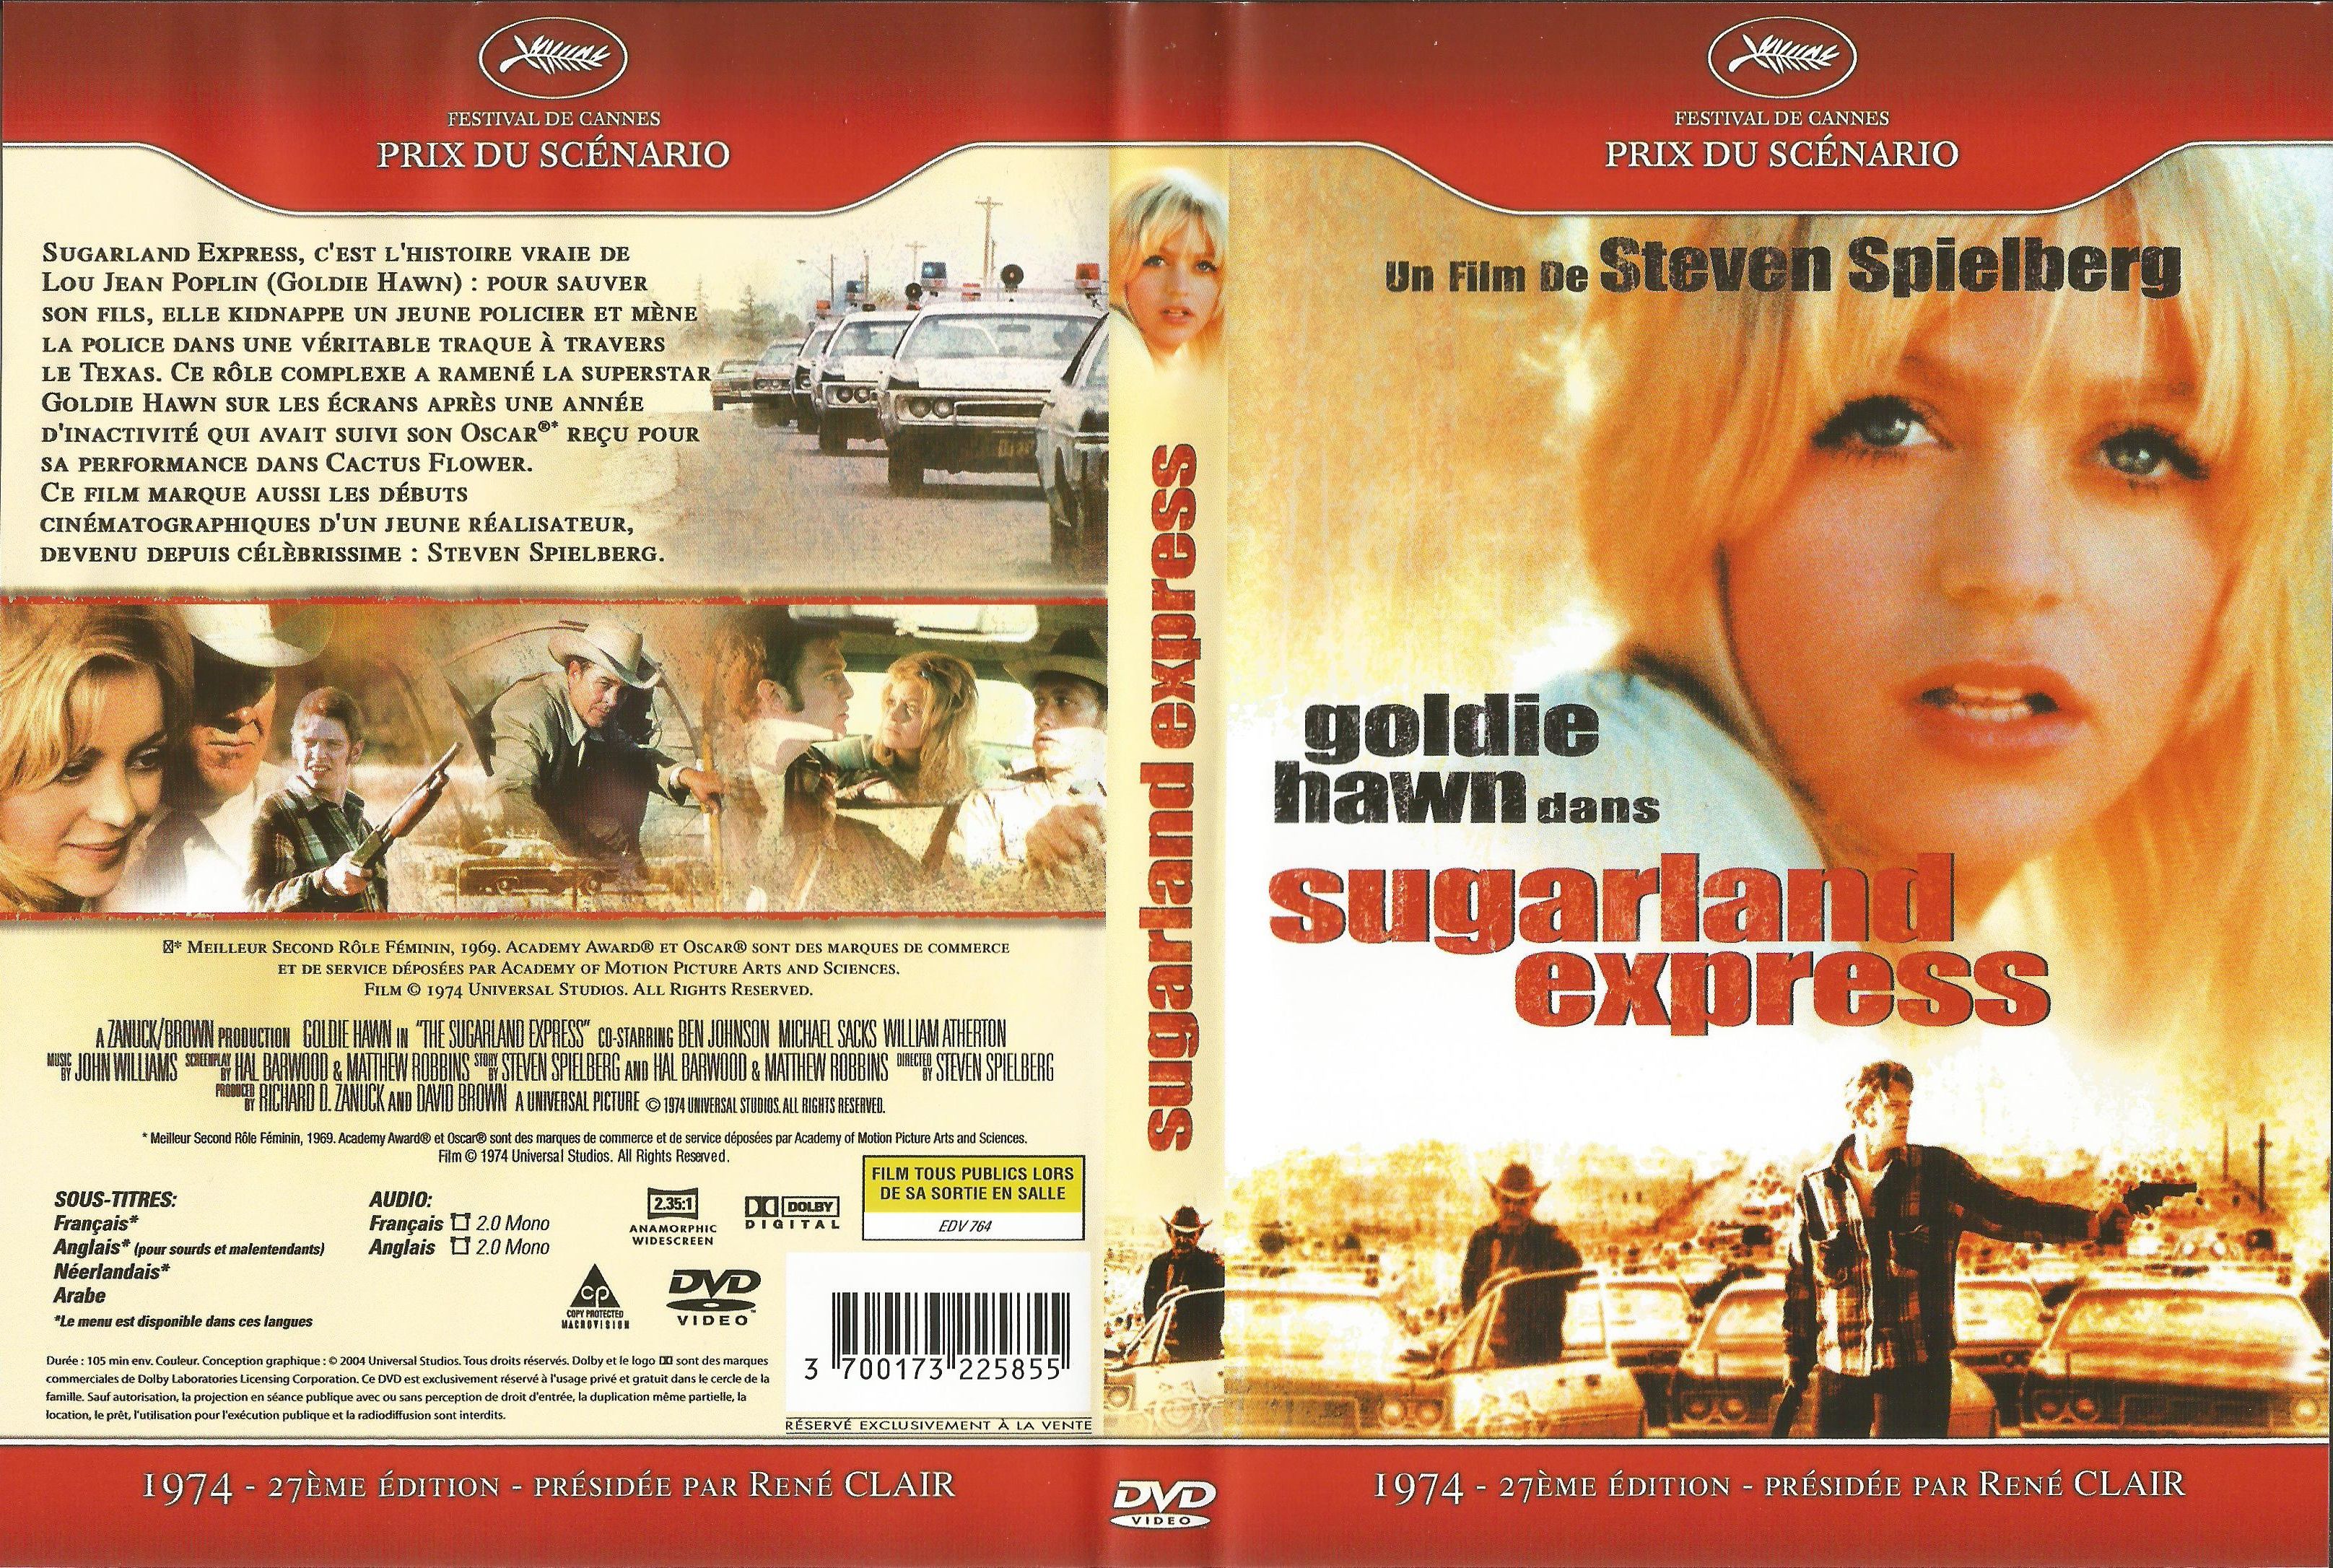 Jaquette DVD Sugarland express v2